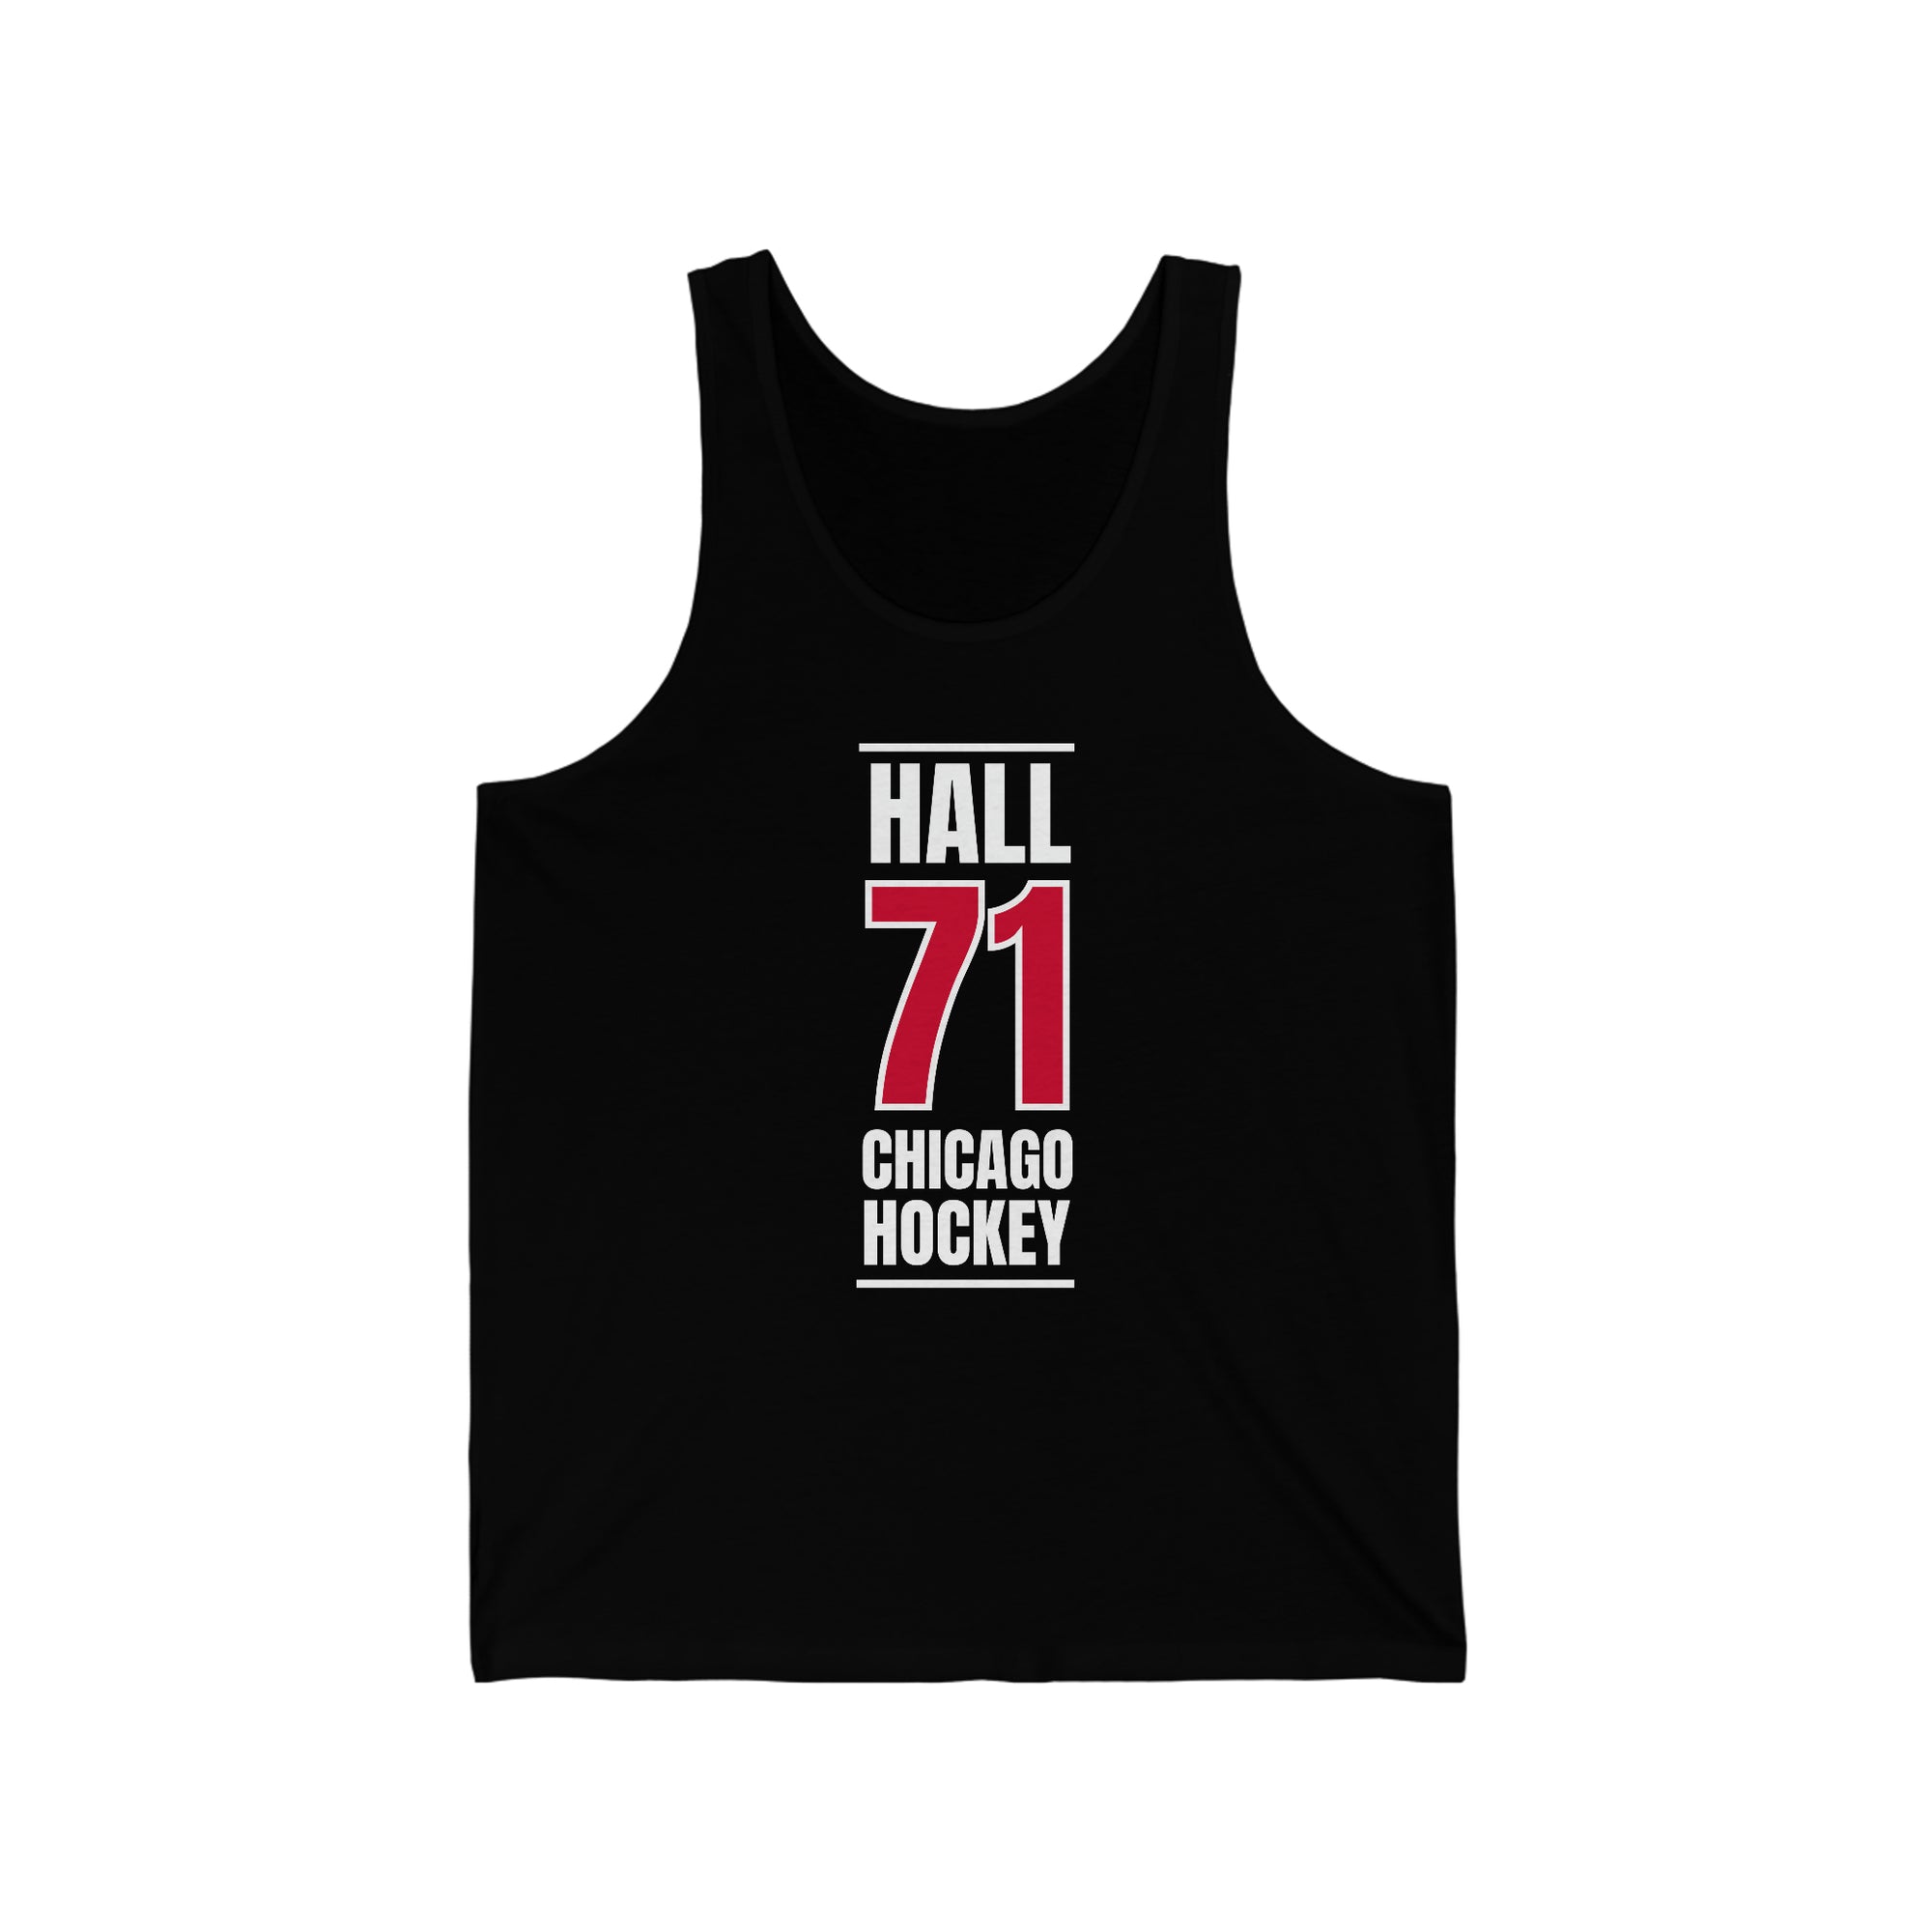 Hall 71 Chicago Hockey Red Vertical Design Unisex Jersey Tank Top